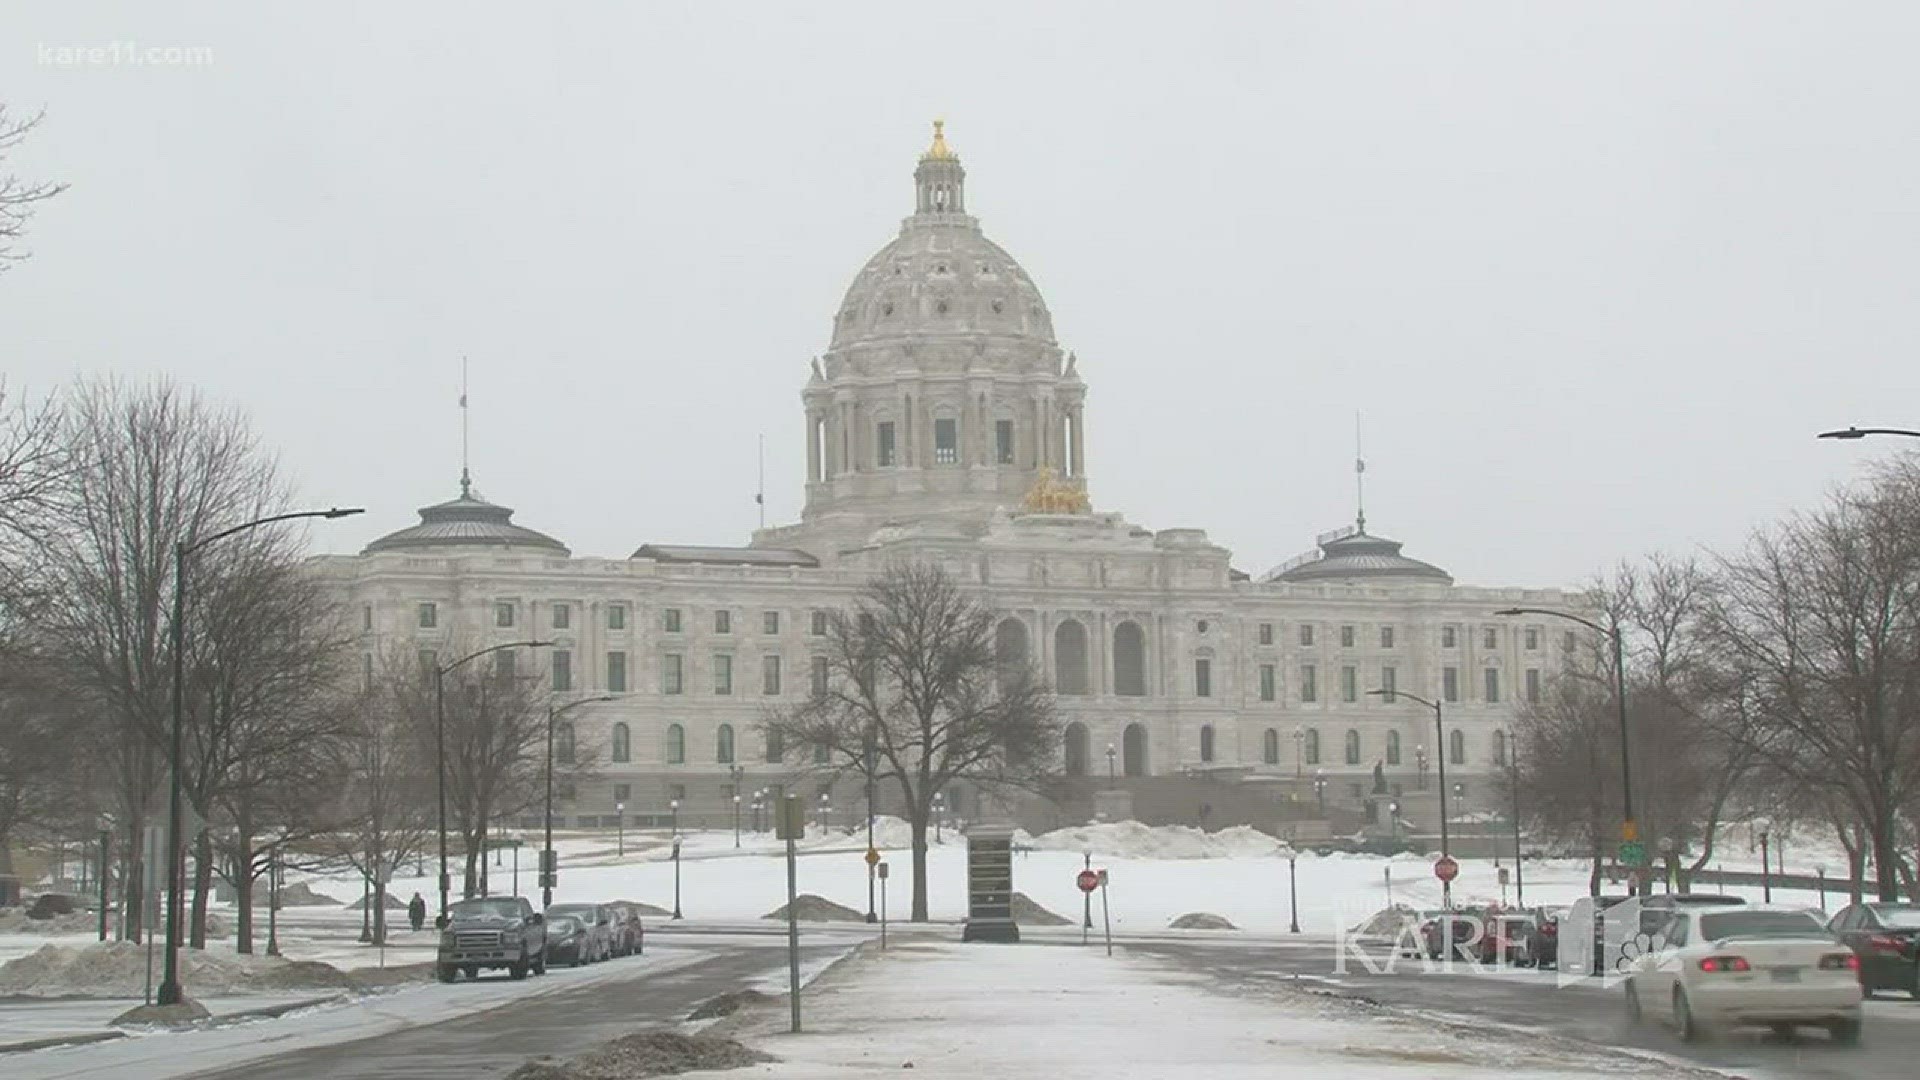 Unfinished business awaits Minnesota's 2018 legislative session